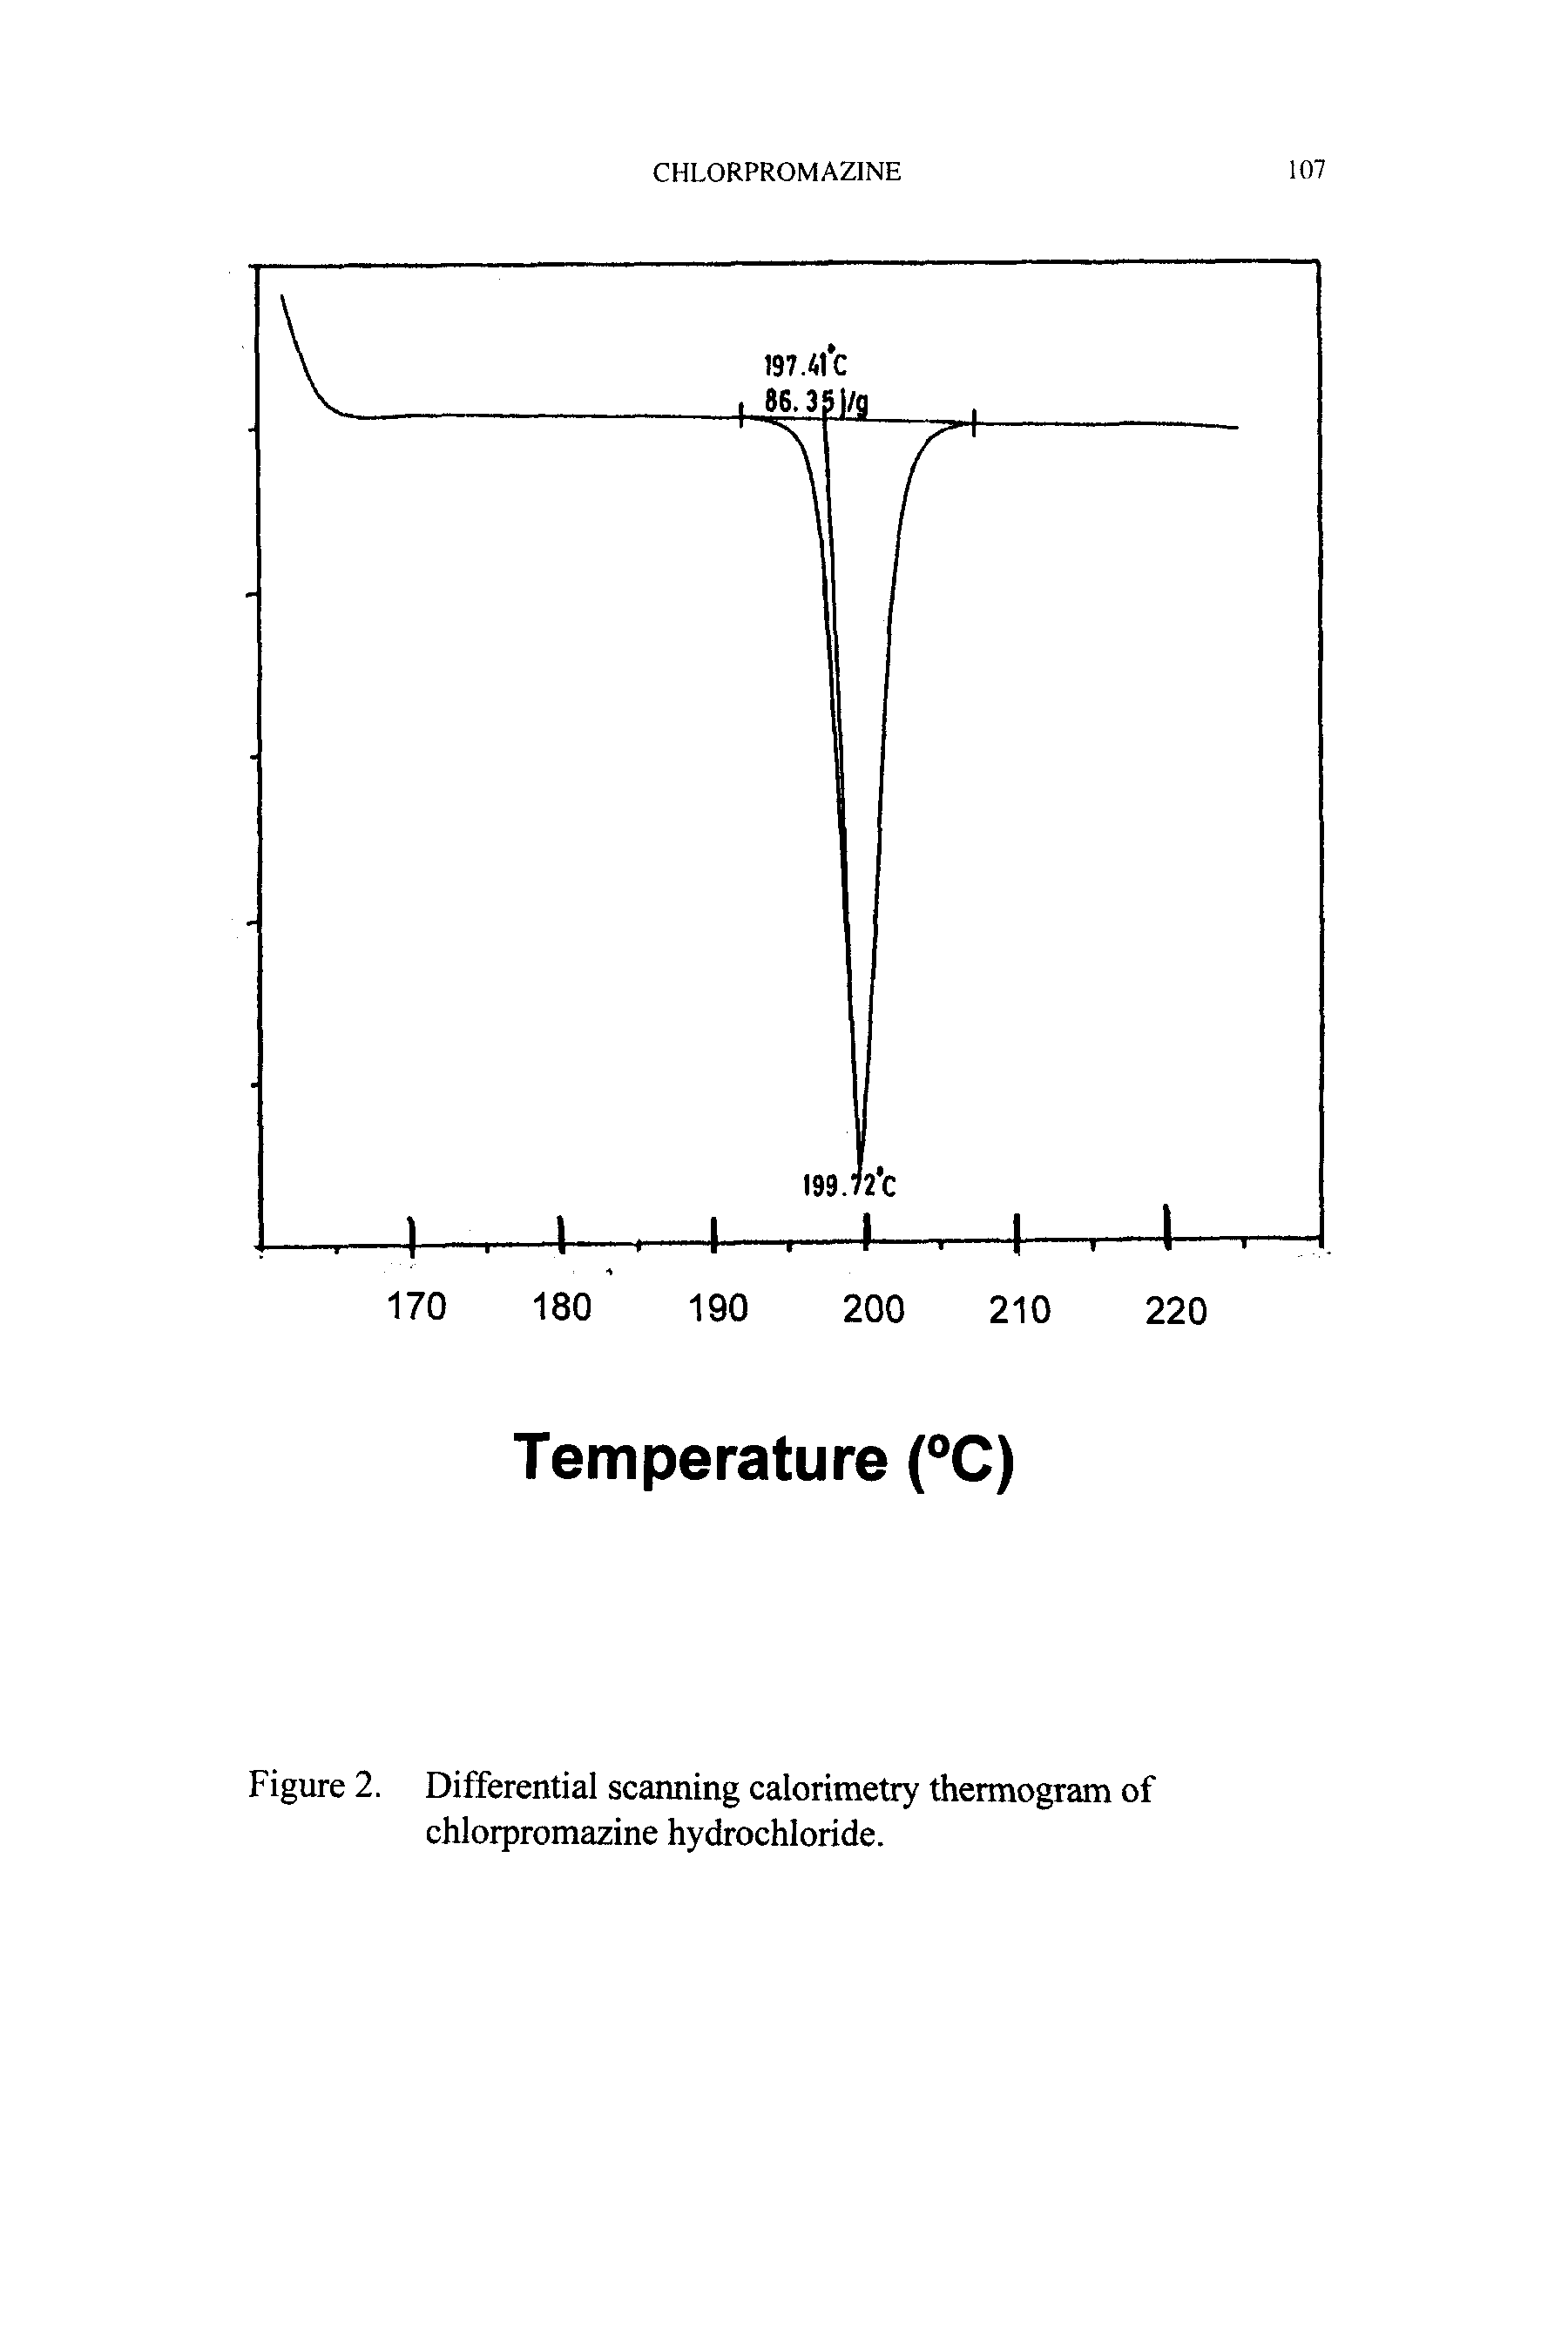 Figure 2. Differential scaiming calorimetry thermogram of chlorpromazine hydrochloride.